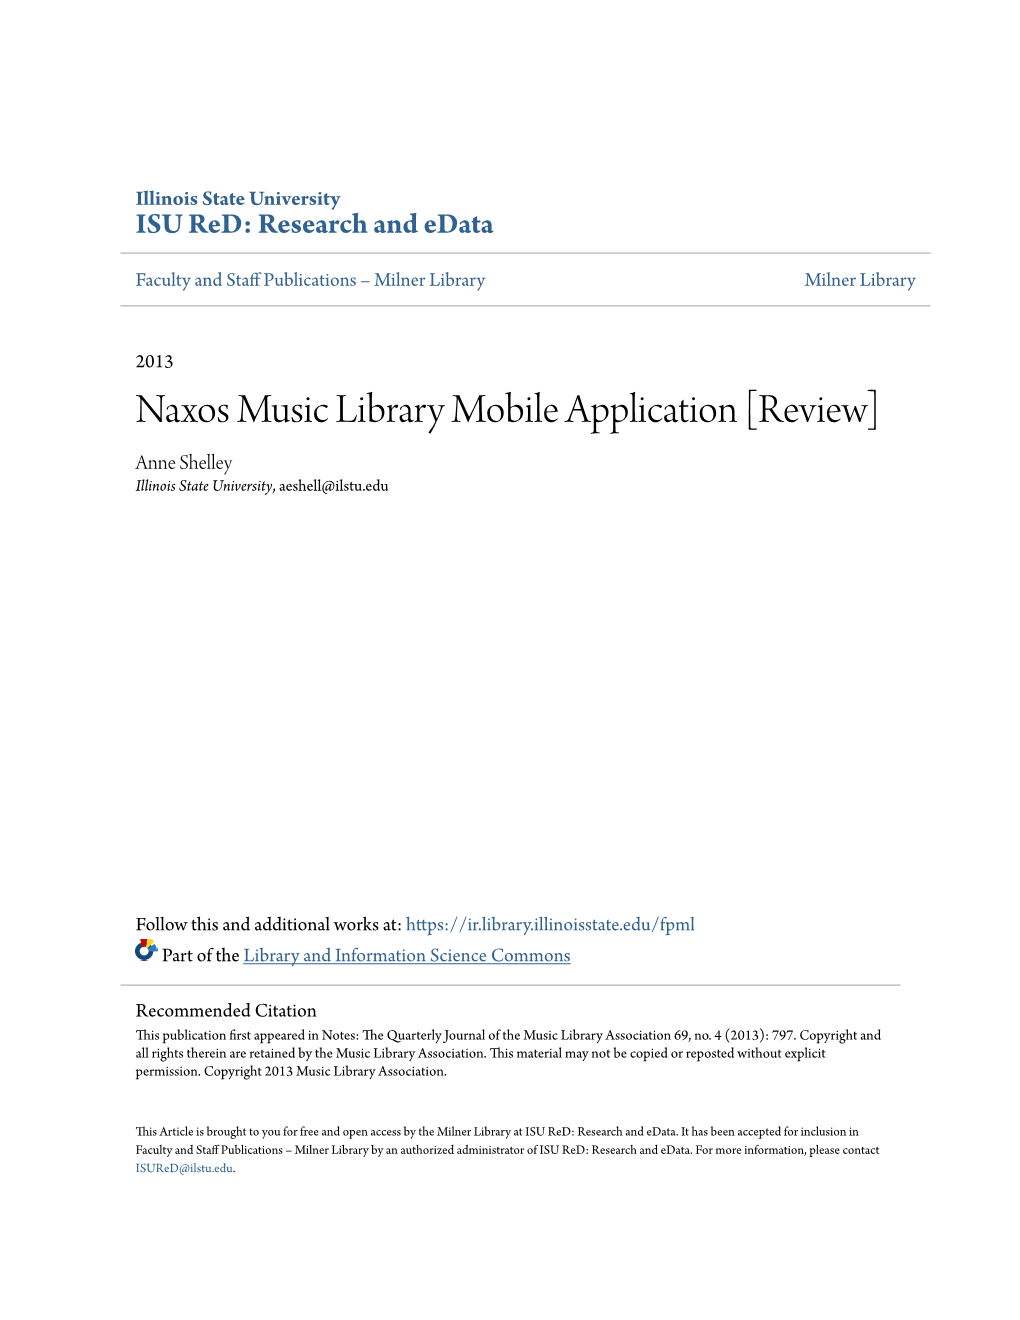 Naxos Music Library Mobile Application [Review] Anne Shelley Illinois State University, Aeshell@Ilstu.Edu